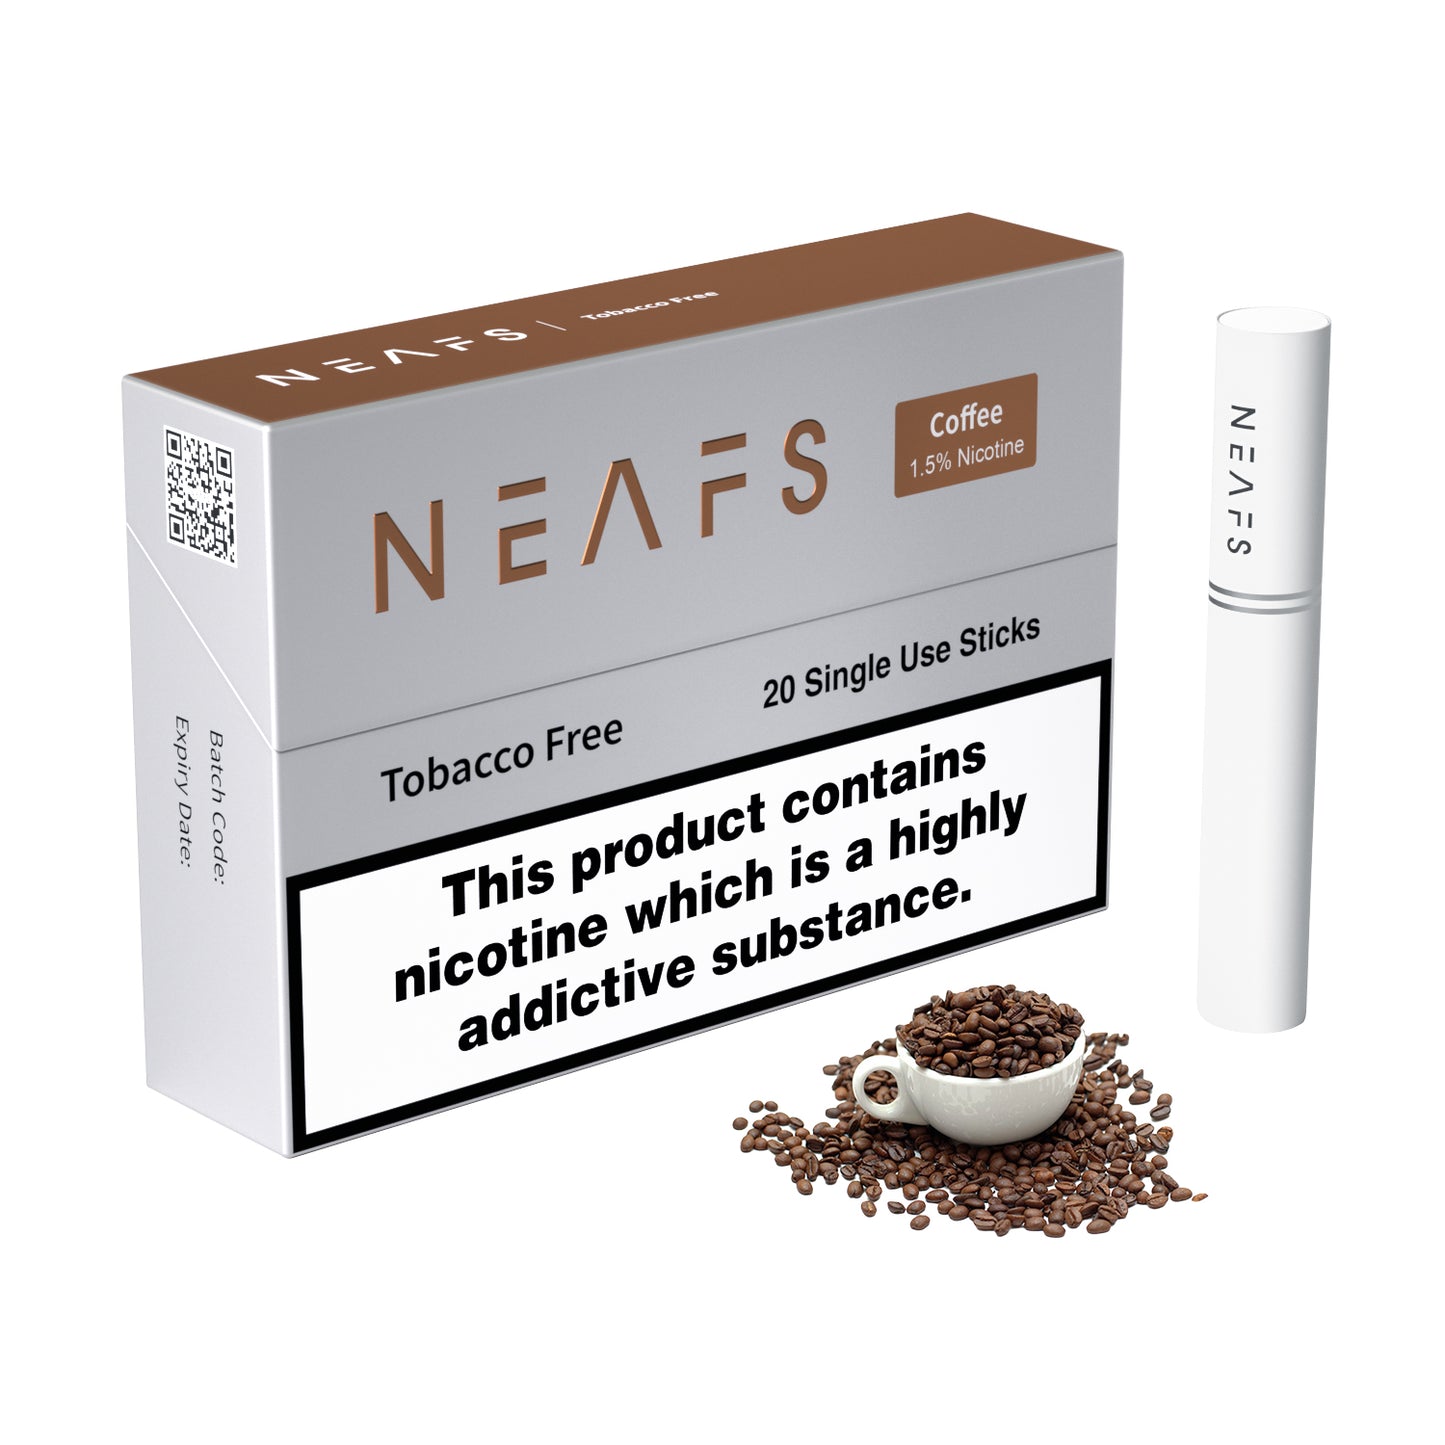 NEAFS Coffee Tobacco Free Heated Sticks – 200 Sticks